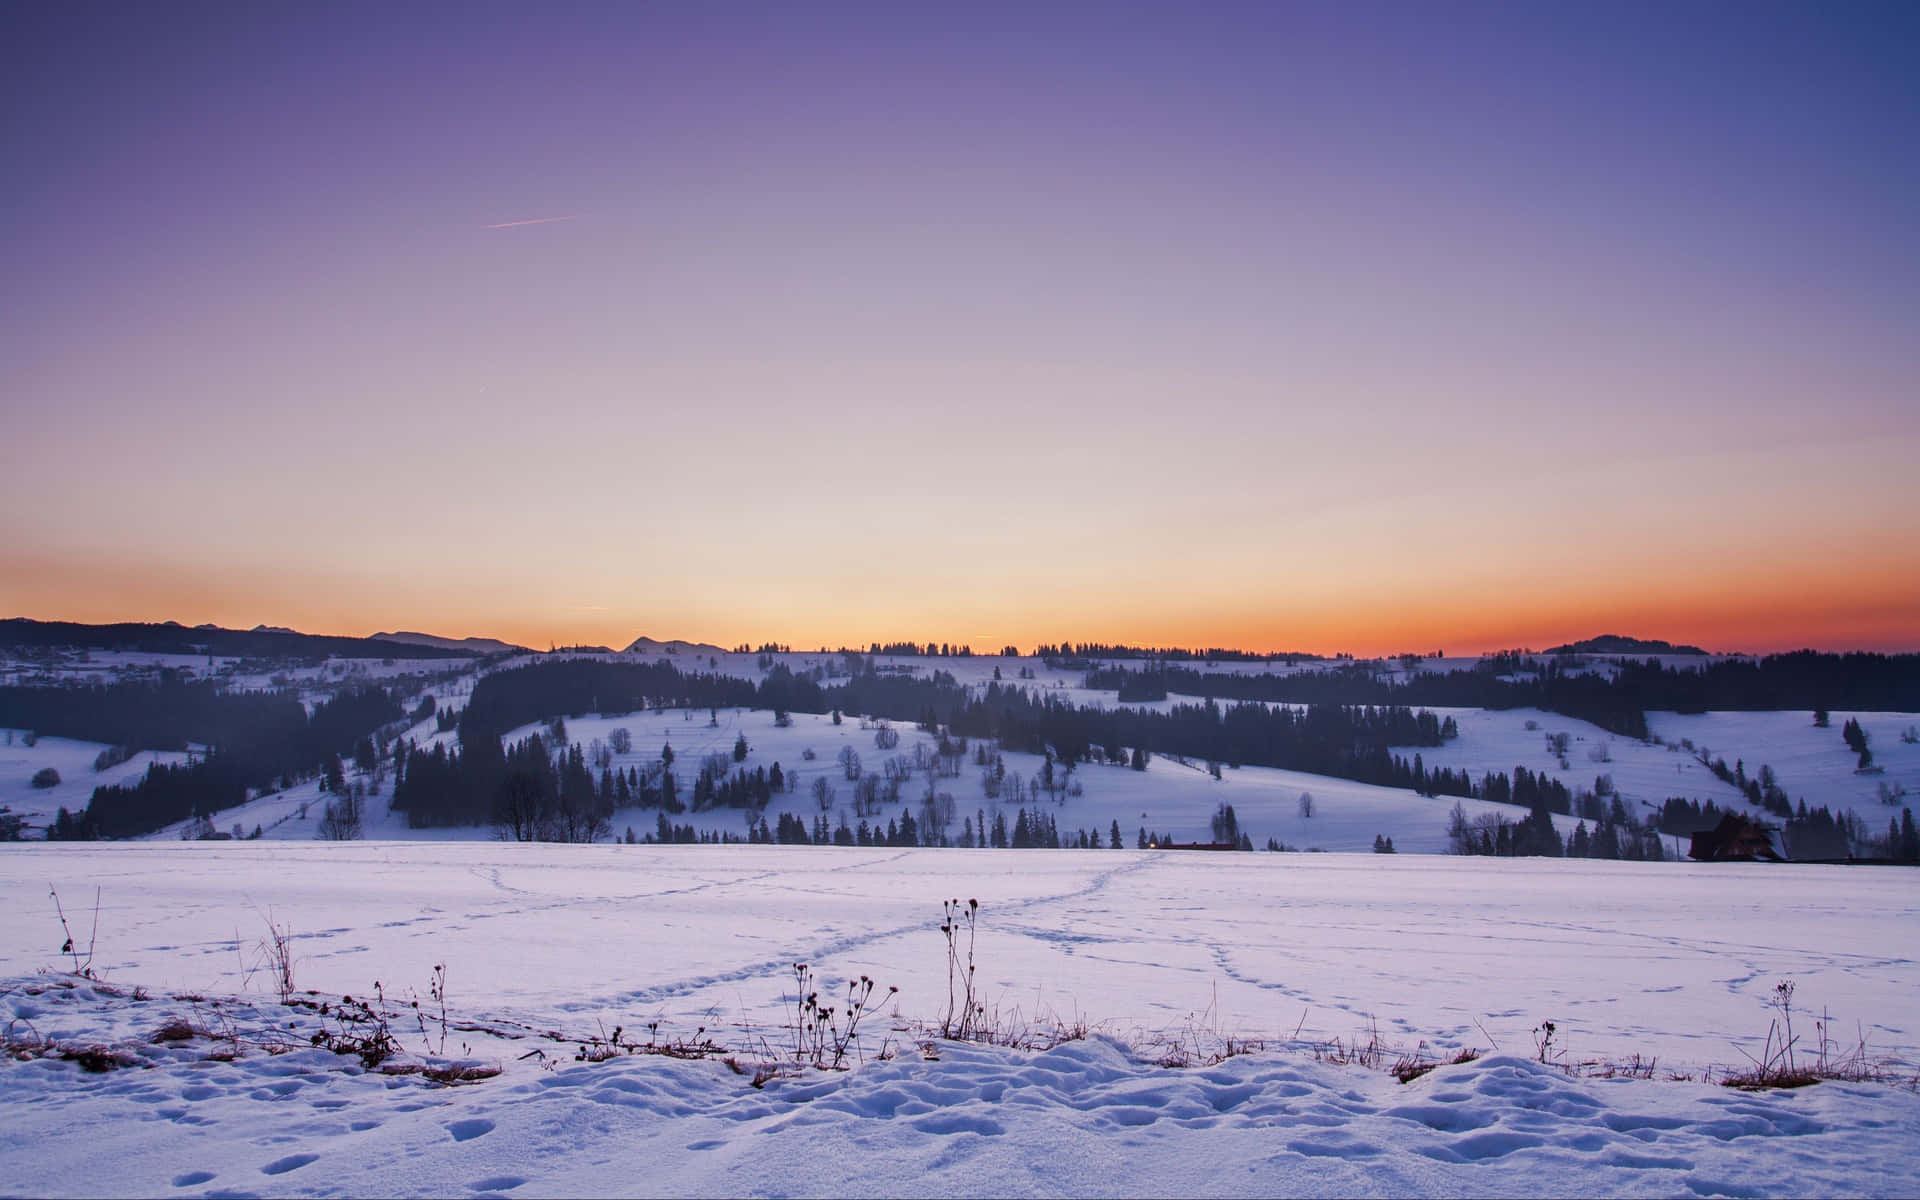 Winter Sunset Over Snow-Covered Landscape Wallpaper